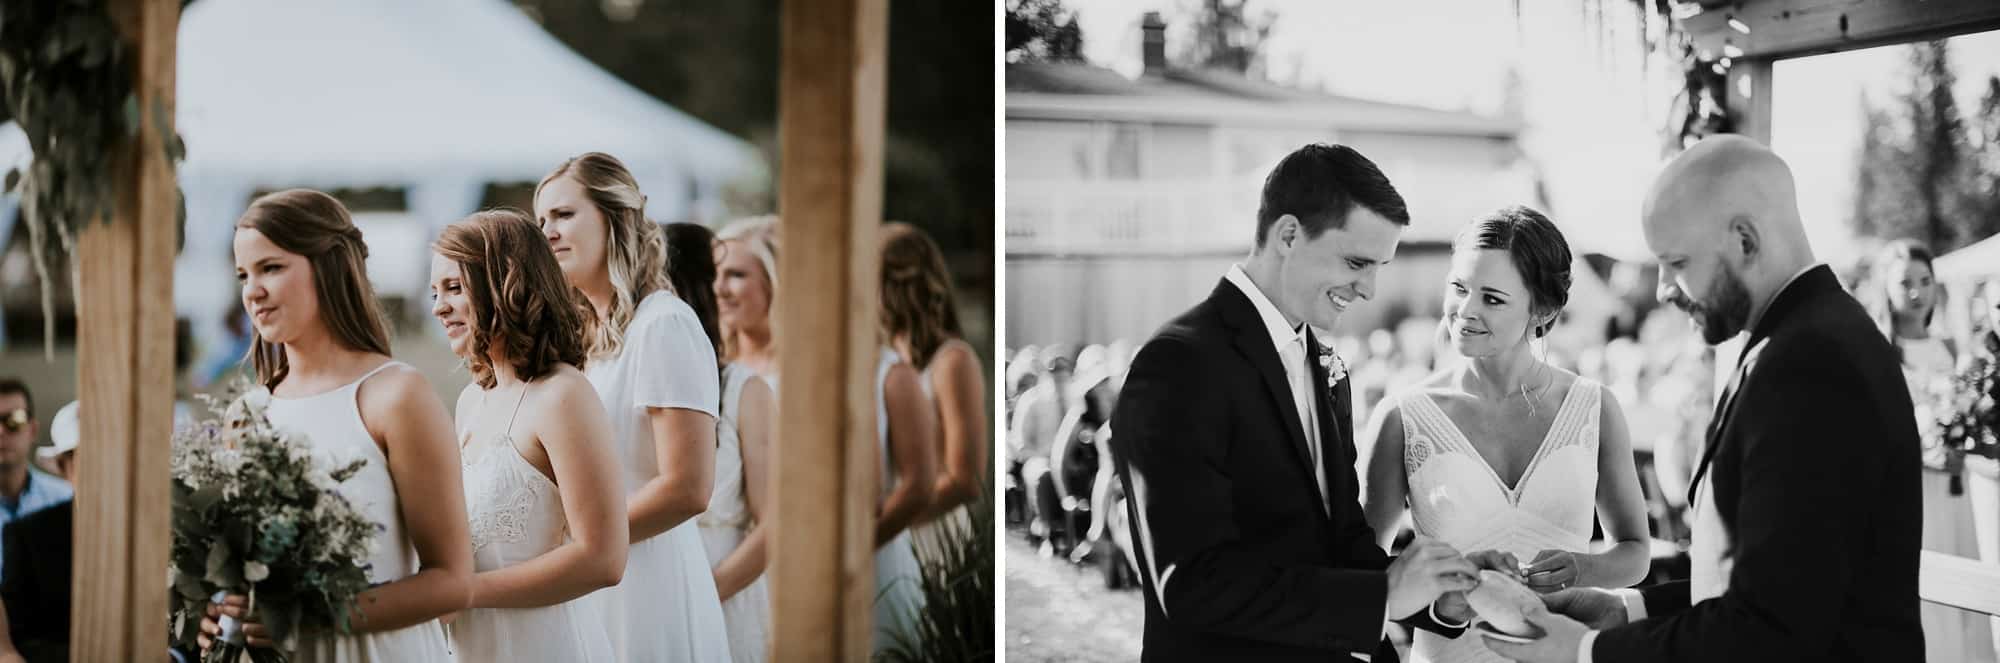 maisie-morgan-spokane-washington-pacific-northwest-backyard-wedding-00032